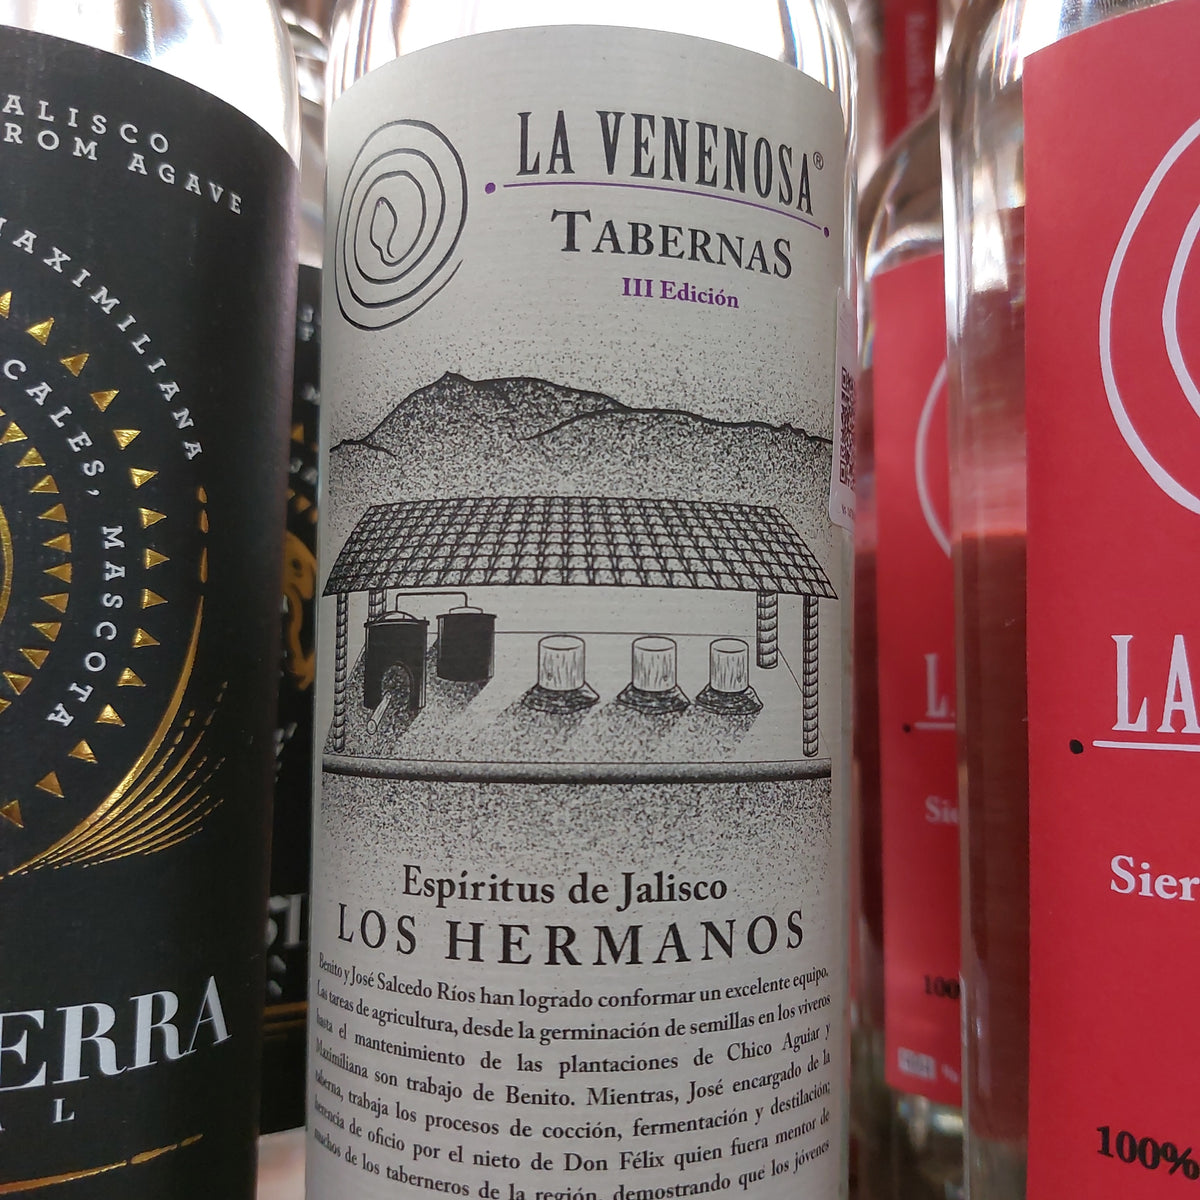 Raicilla La Venenosa Tabernas - Tequila